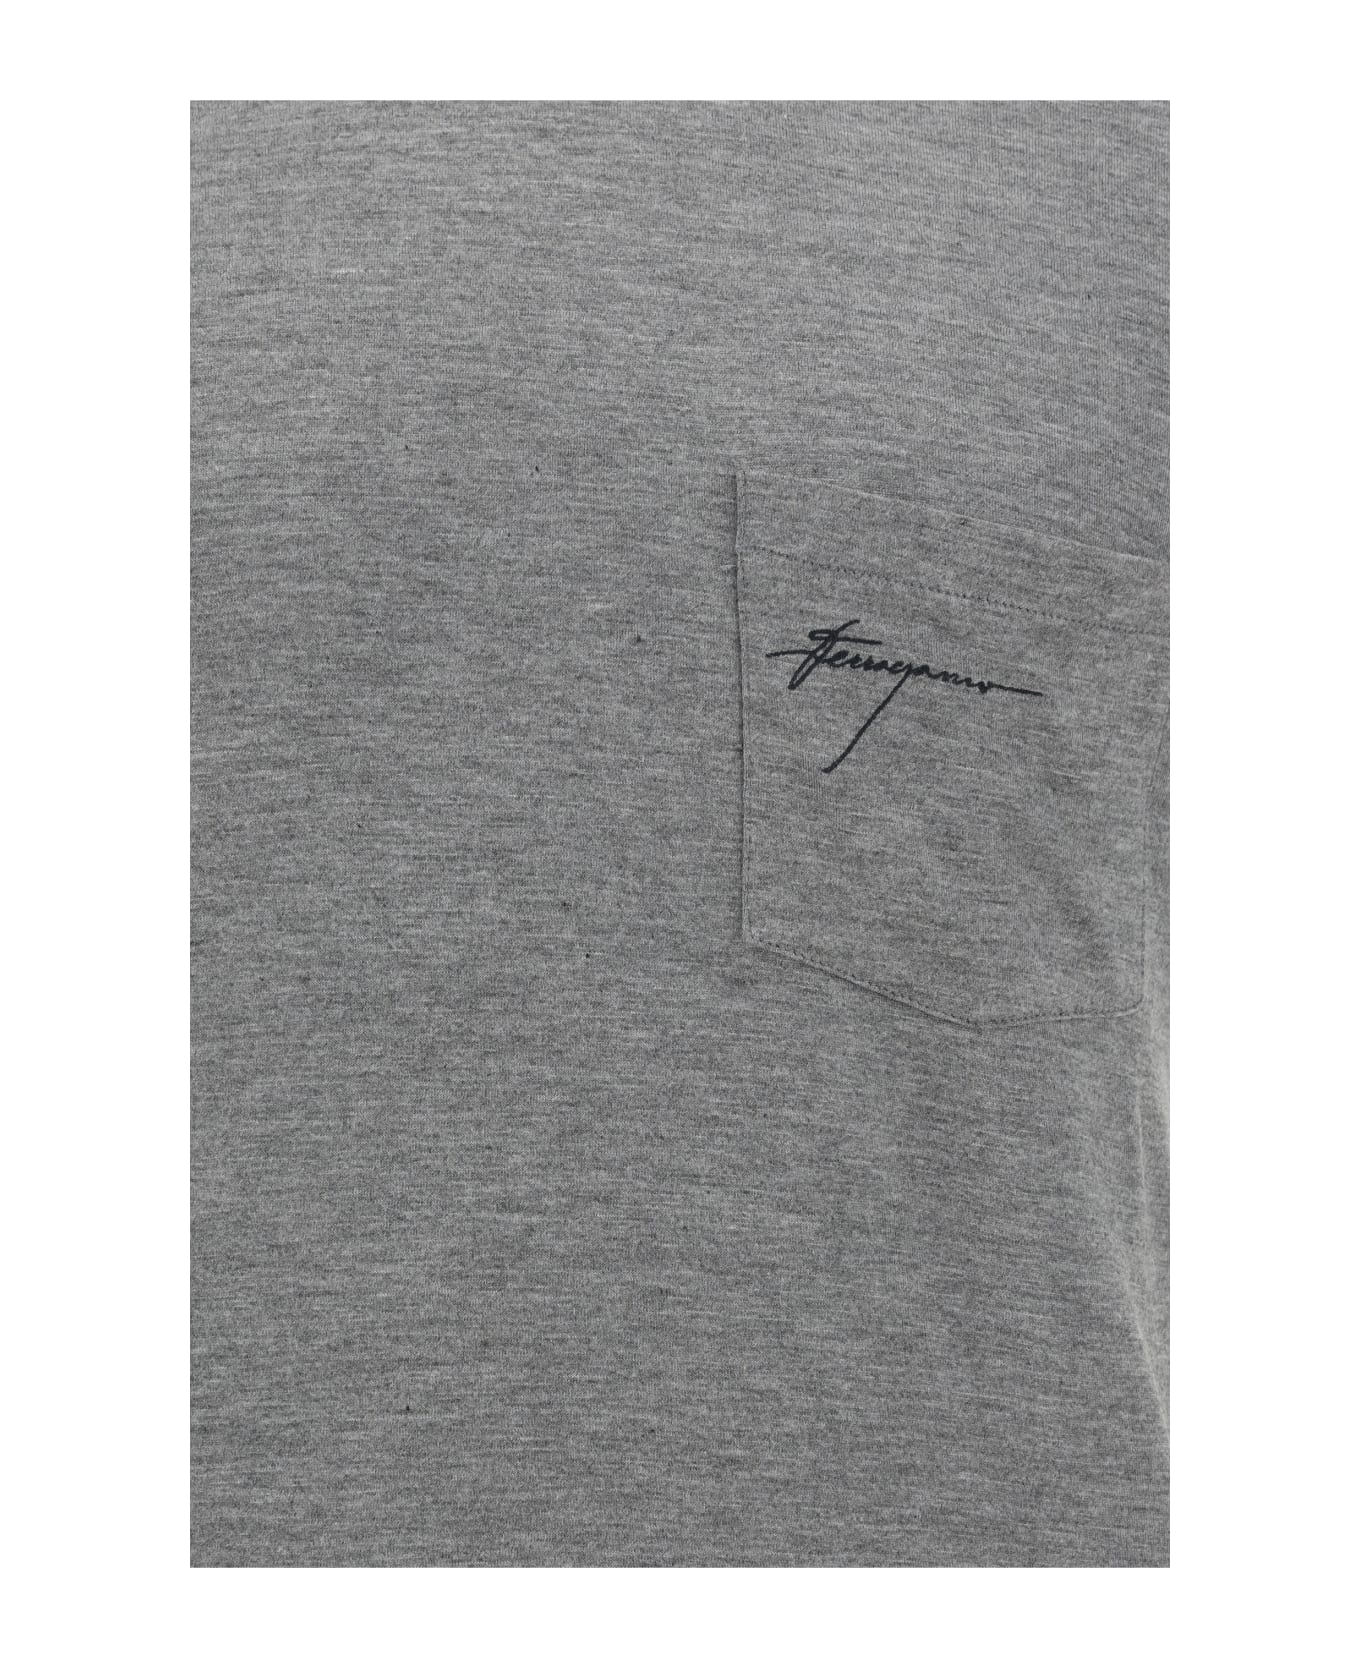 Ferragamo T-shirt - Grey シャツ